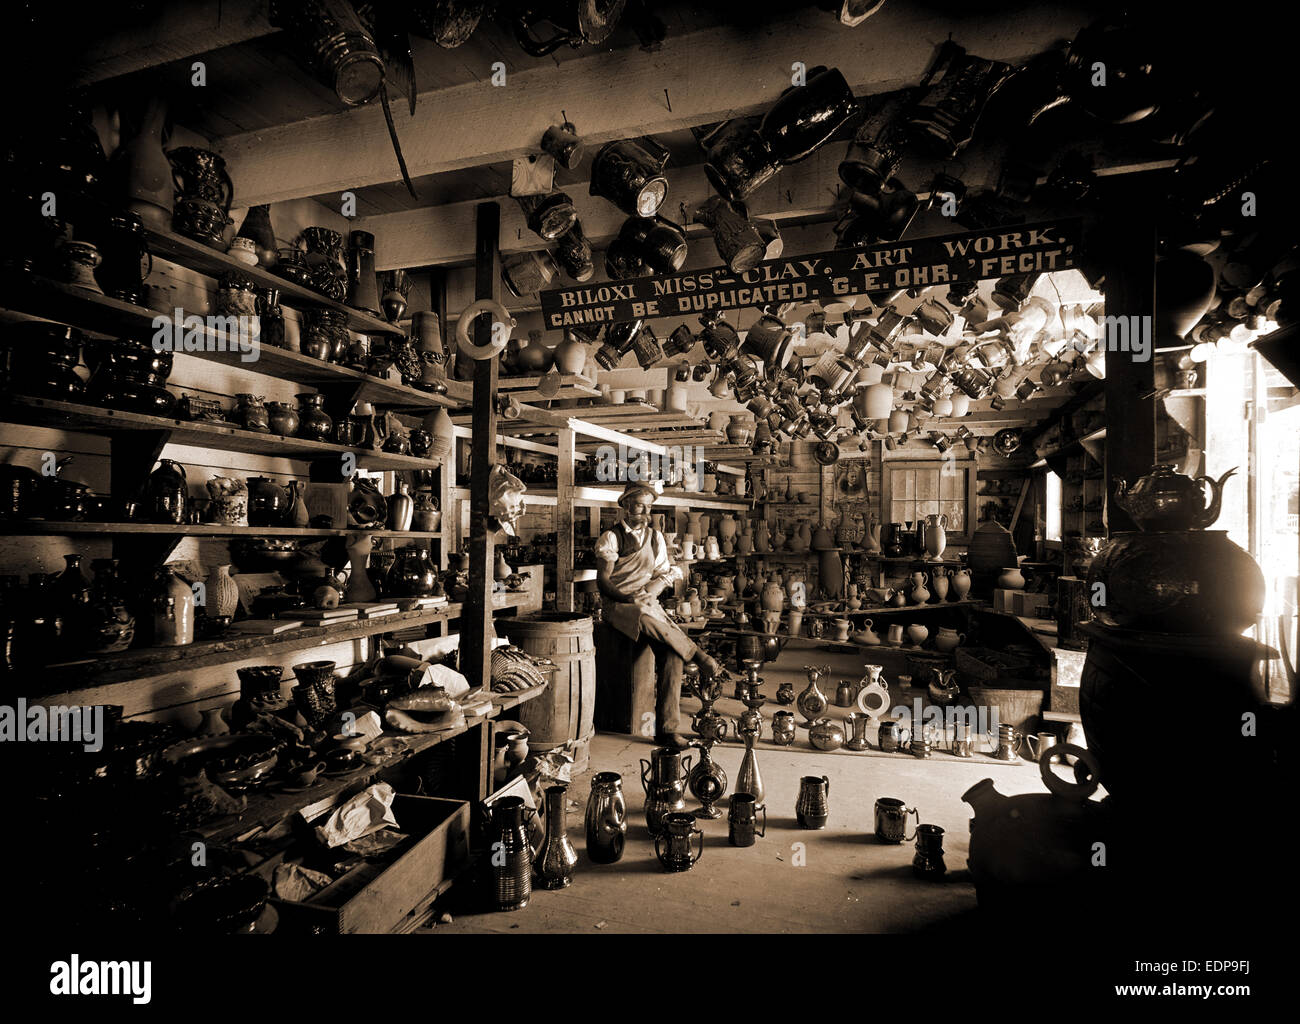 Innenraum der Töpferei, Biloxi, Miss, Ohr, George E,, 1857-1918, Potteries, Innenräume, USA, Mississippi, Biloxi, 1901 Stockfoto